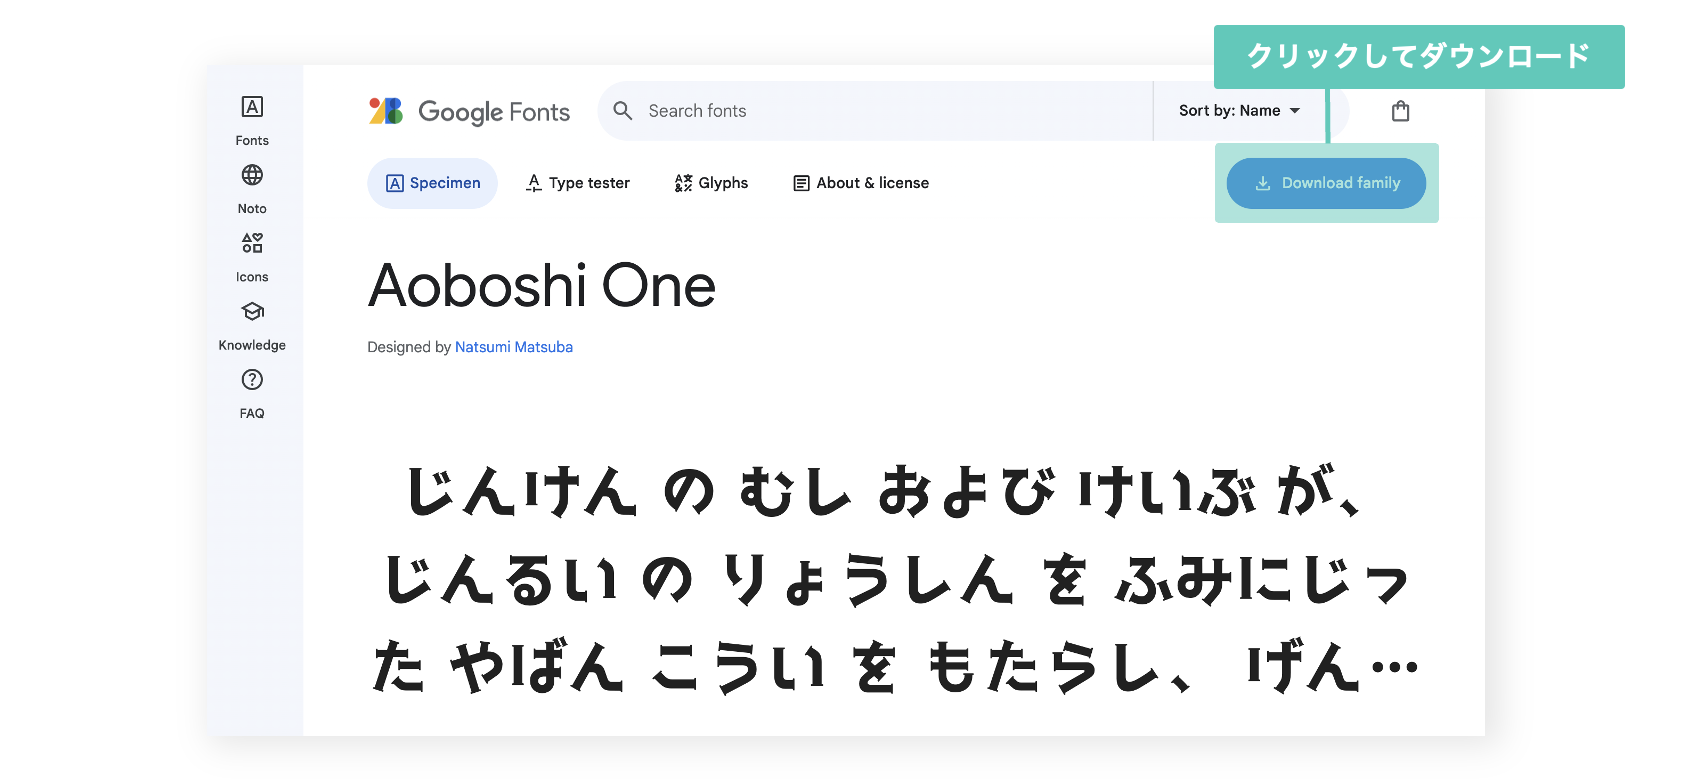 Google Fontsからフォントをダウンロードする方法の説明